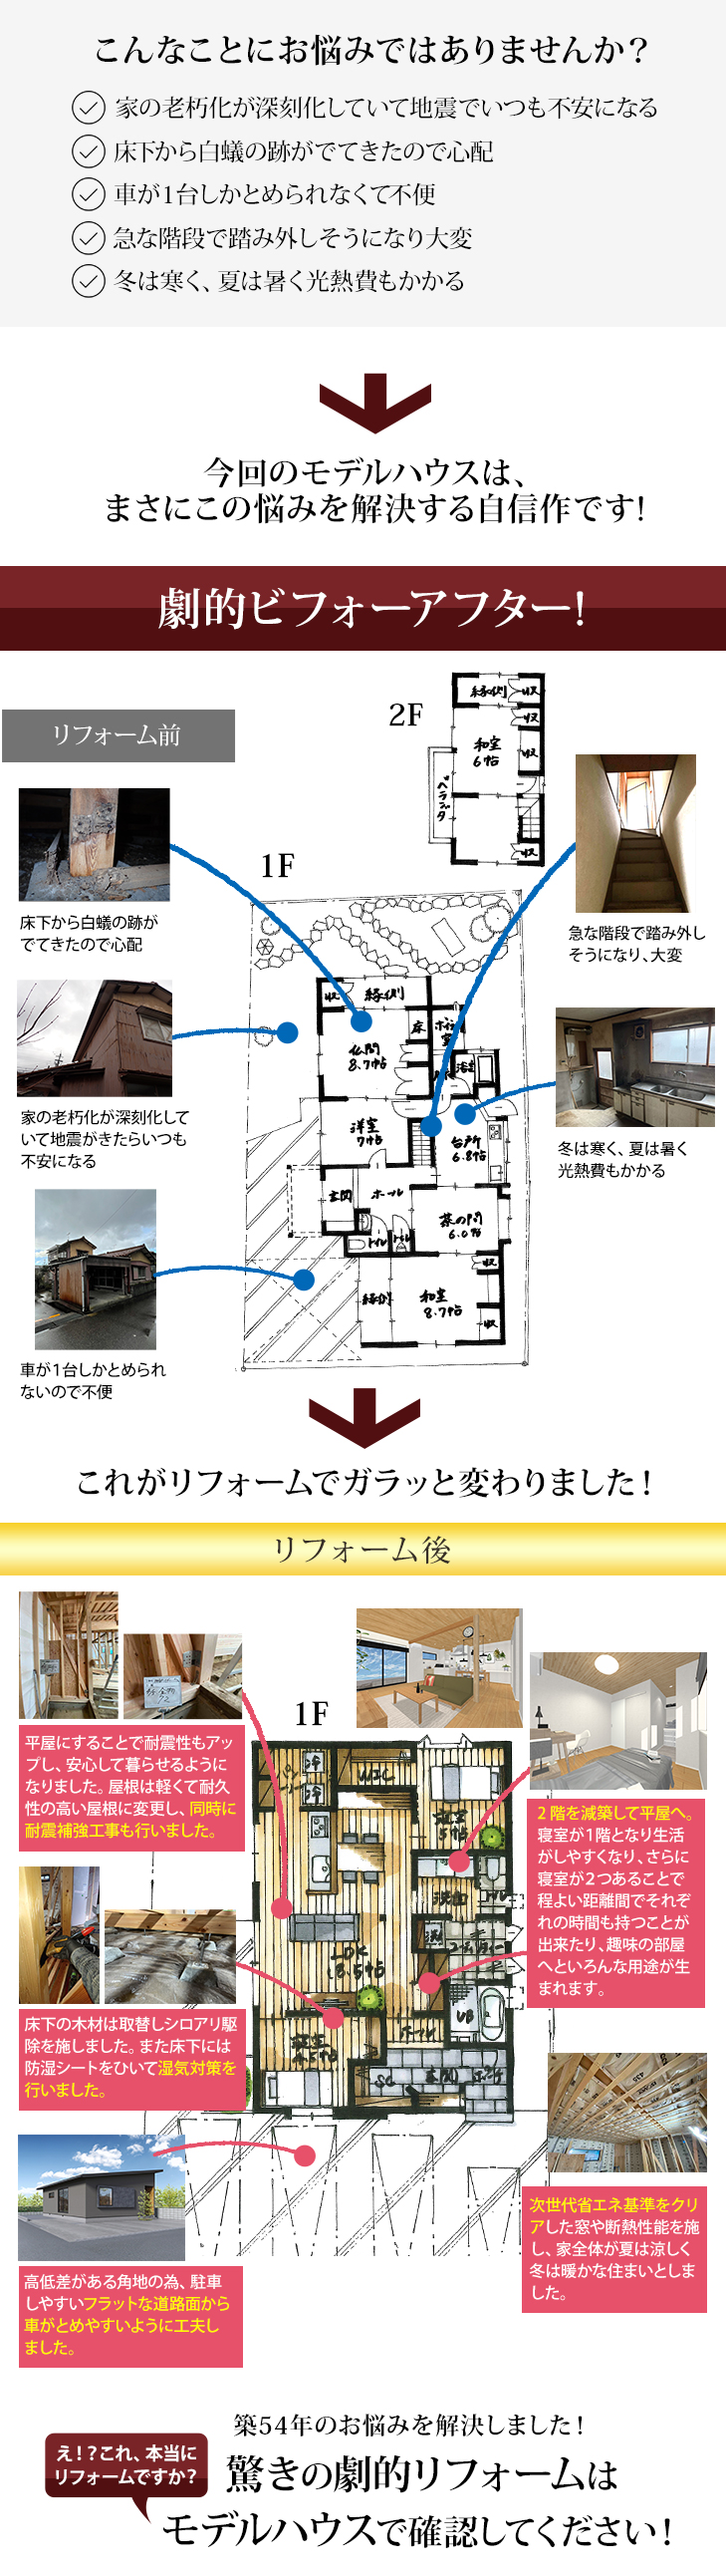 model_kamiyachi_ba.jpg